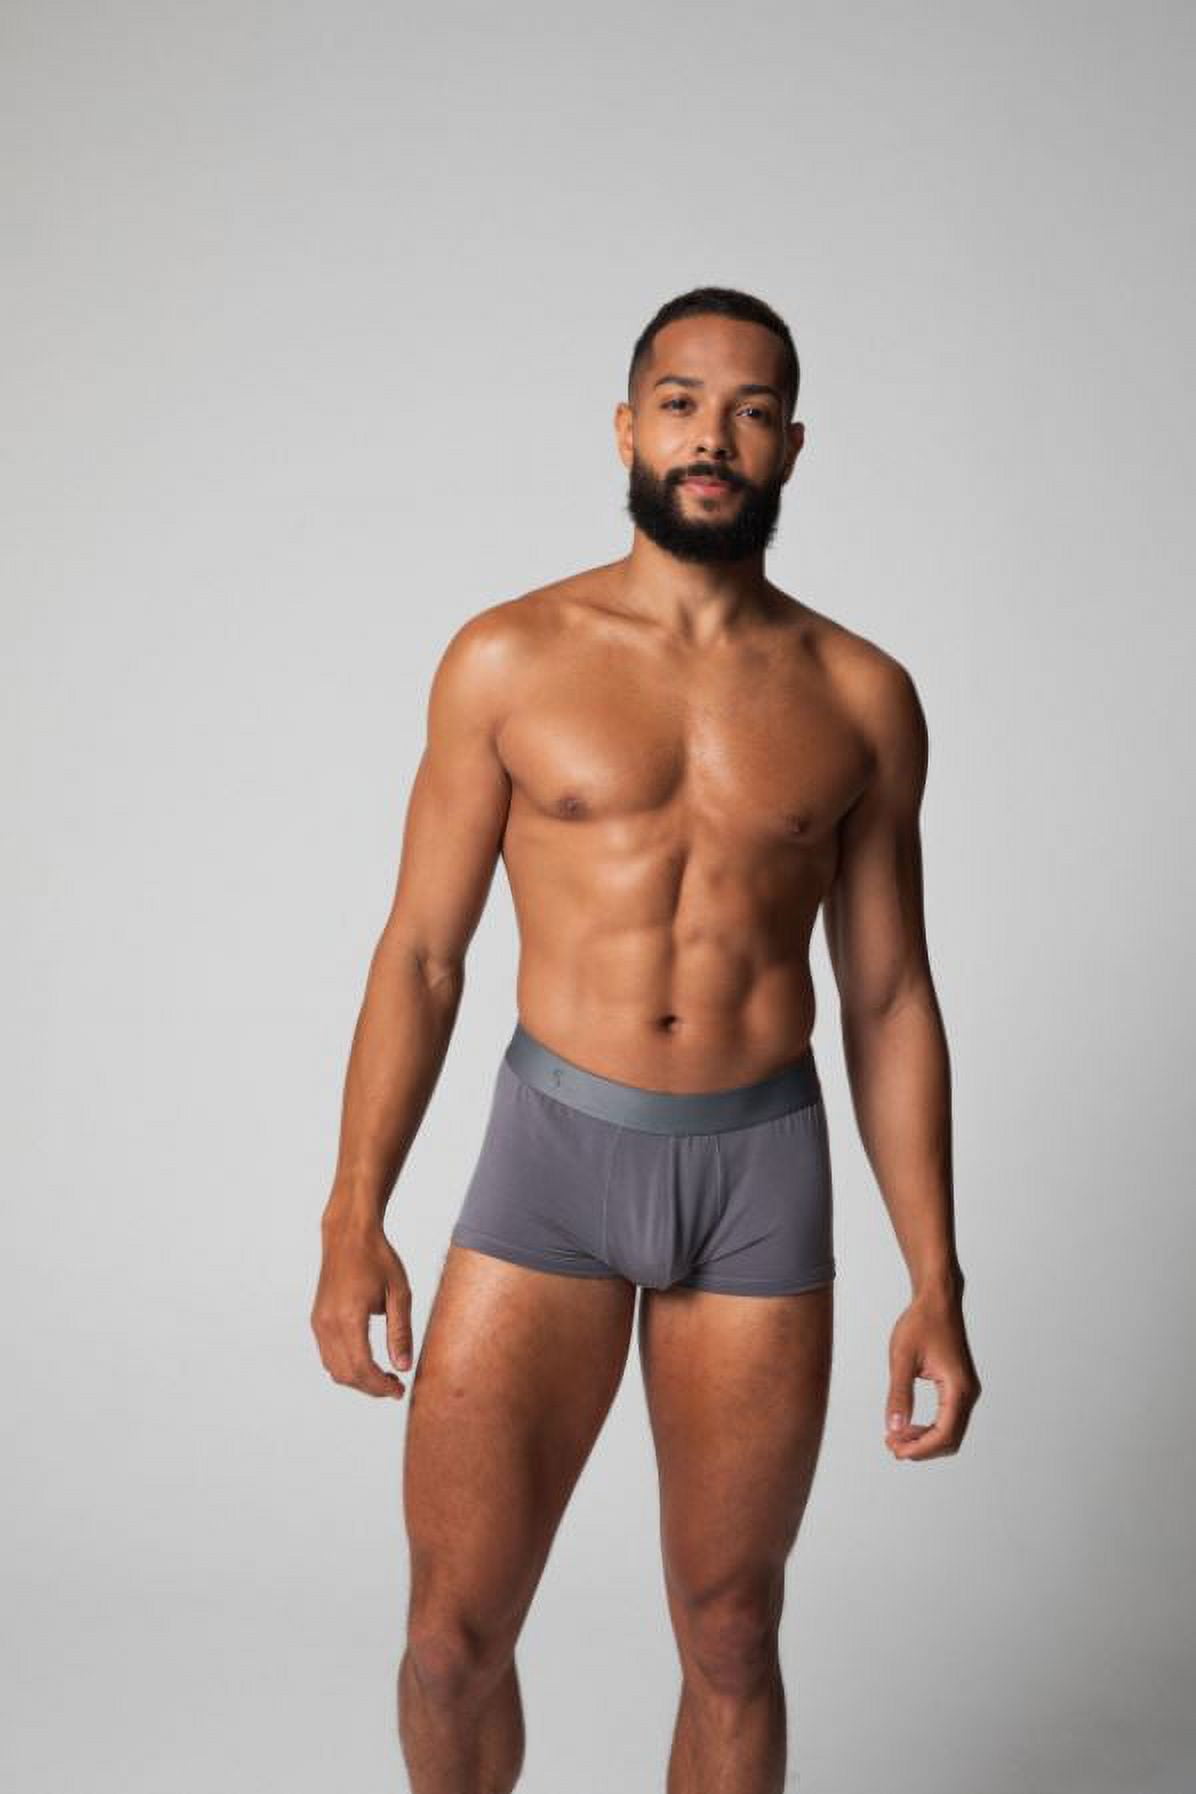 Single Stitch, Men's Trunk Underwear, Sustainable Tencel